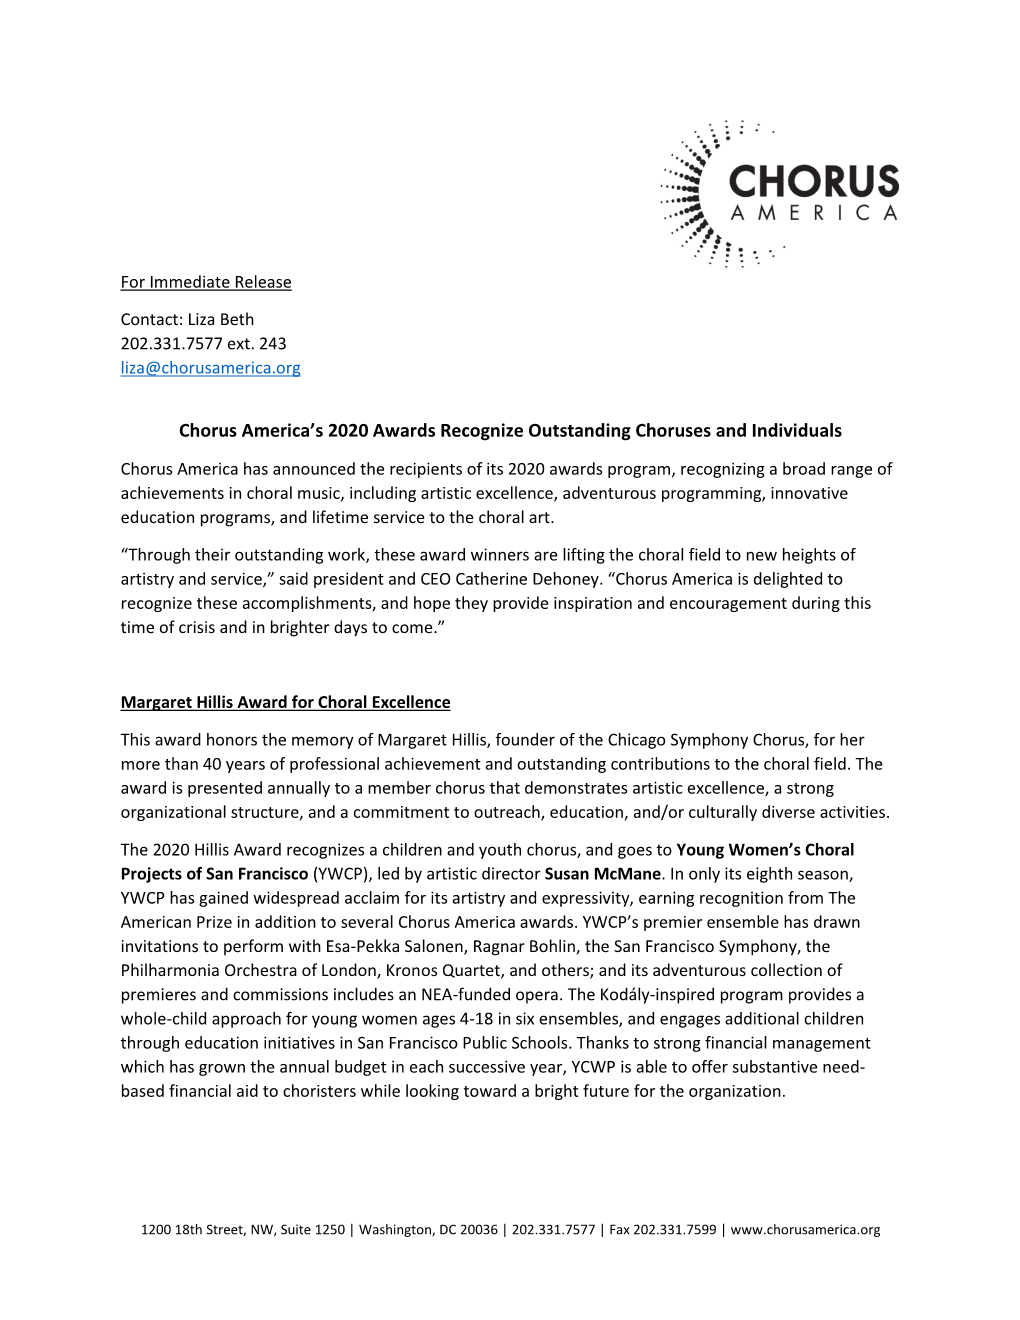 2020 Chorus America Awards Press Release